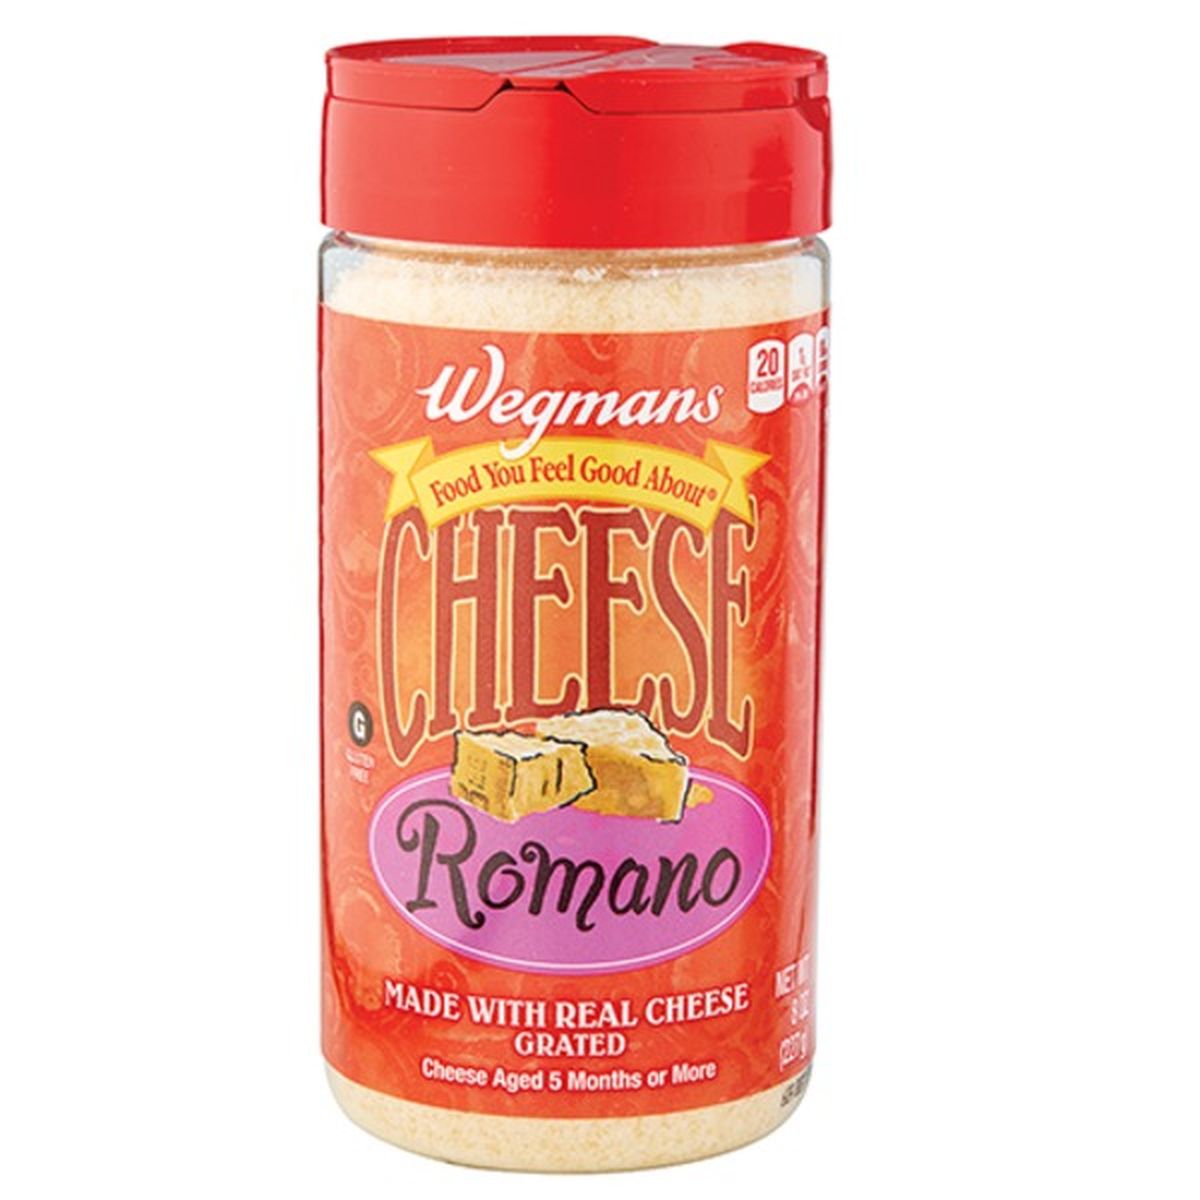 Calories in Wegmans Romano Grated Cheese